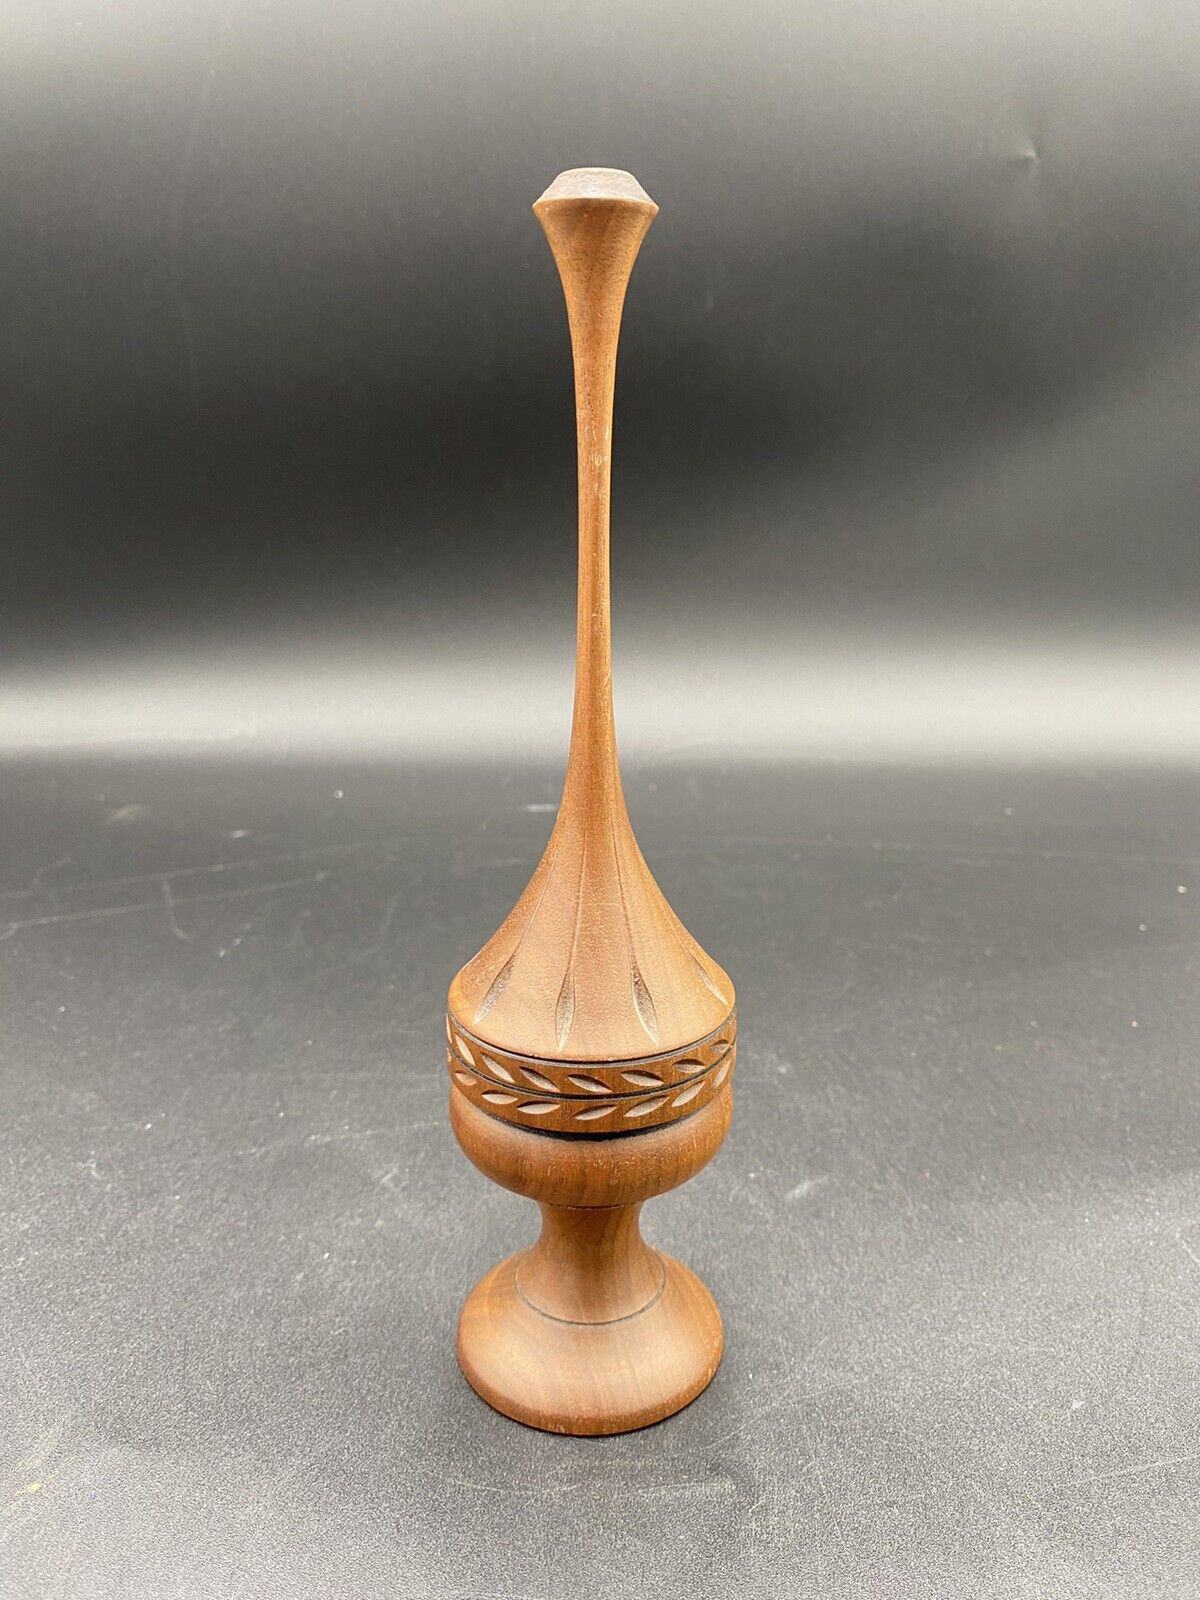 Vintage Weber Wood 1979 Candle Holder/Finial, 8.5”, Hand-Turned Wood, MINT